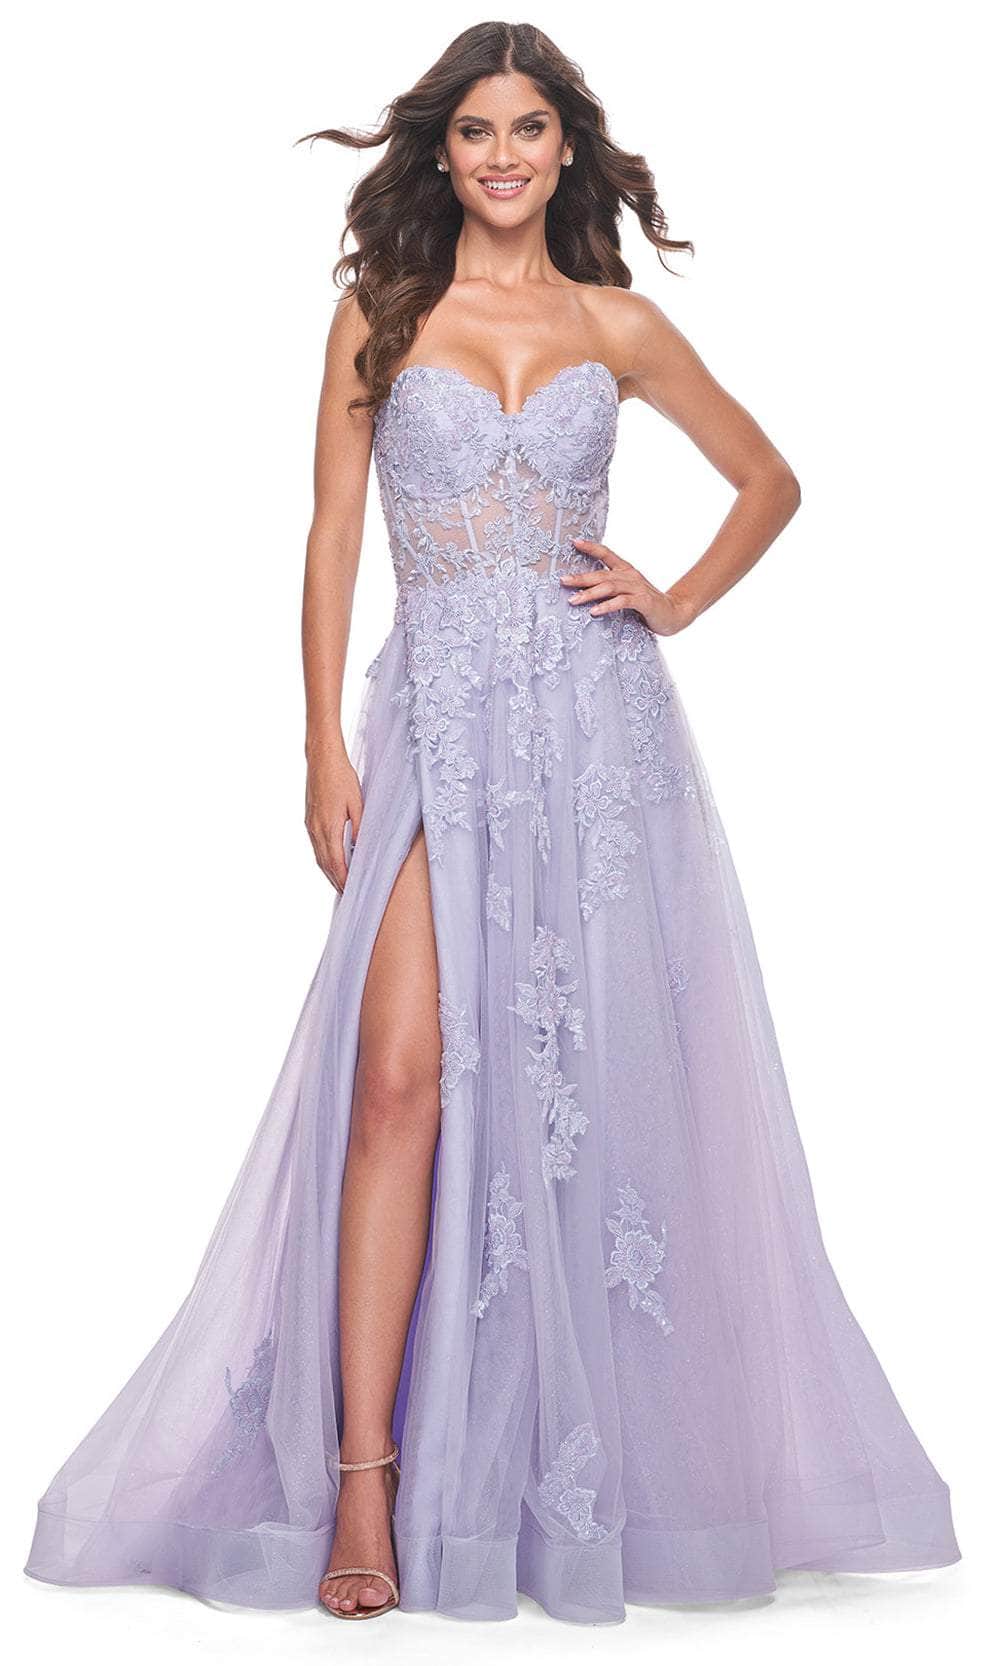 Image of La Femme 32145 - Sweetheart Applique Prom Dress